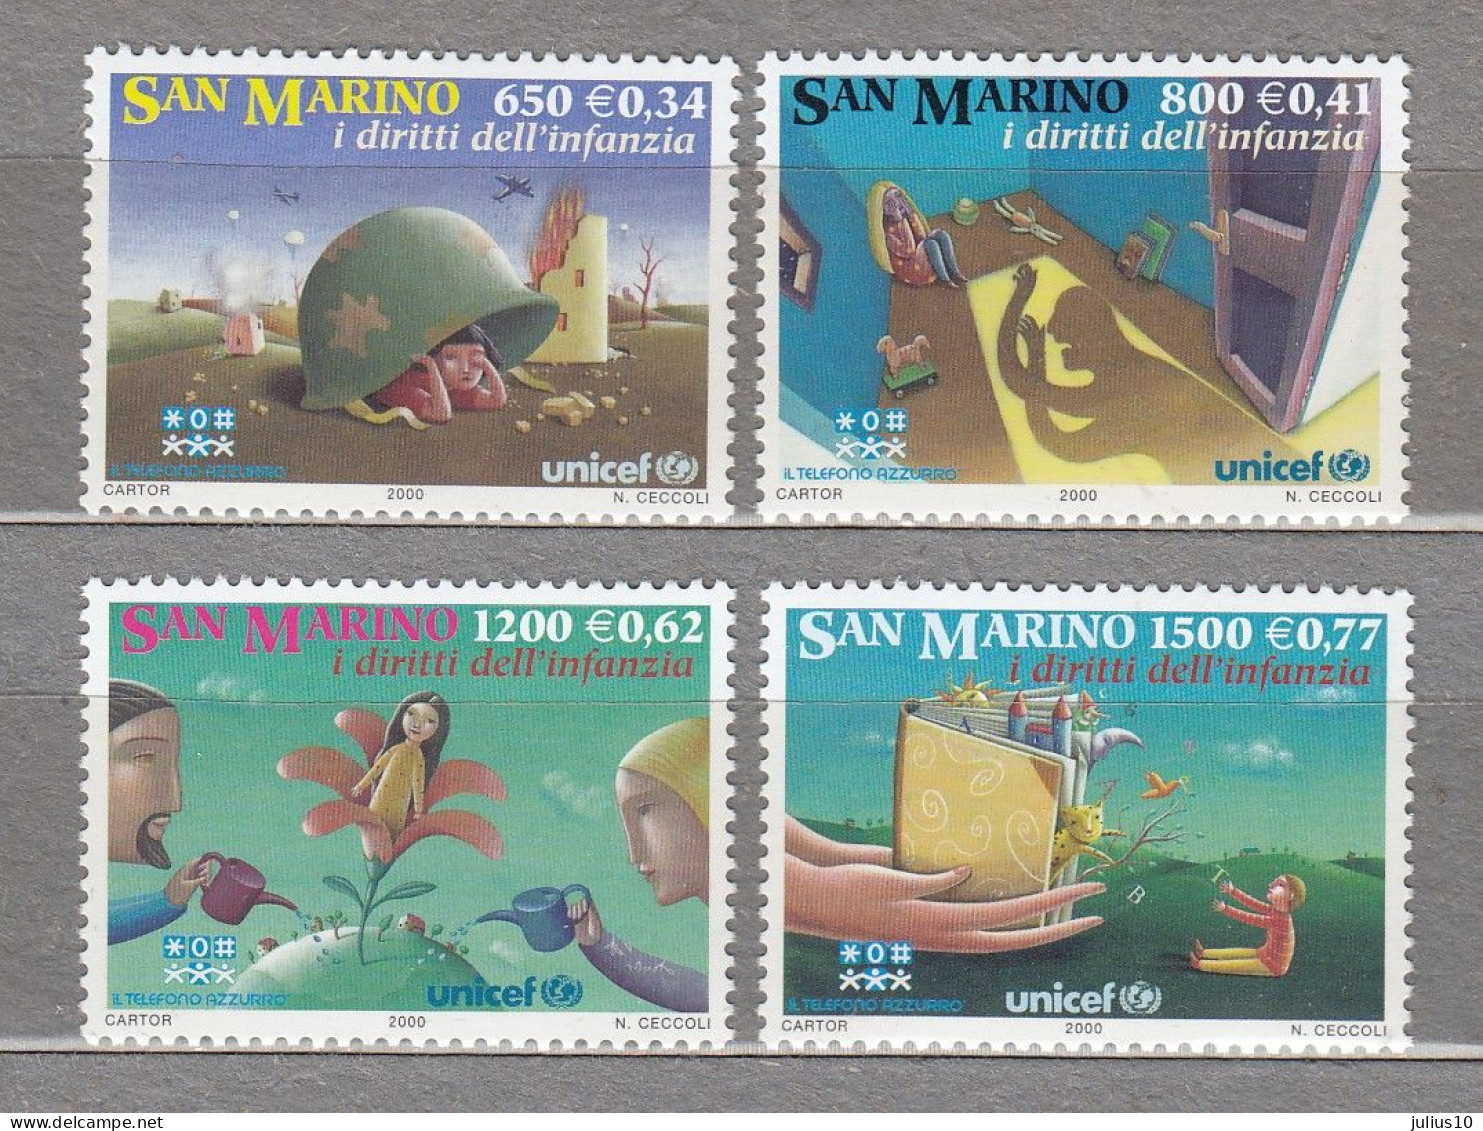 SAN MARINO 2000 UNO Children Mi 1905 - 1908 MNH (**) #22613 - Unused Stamps